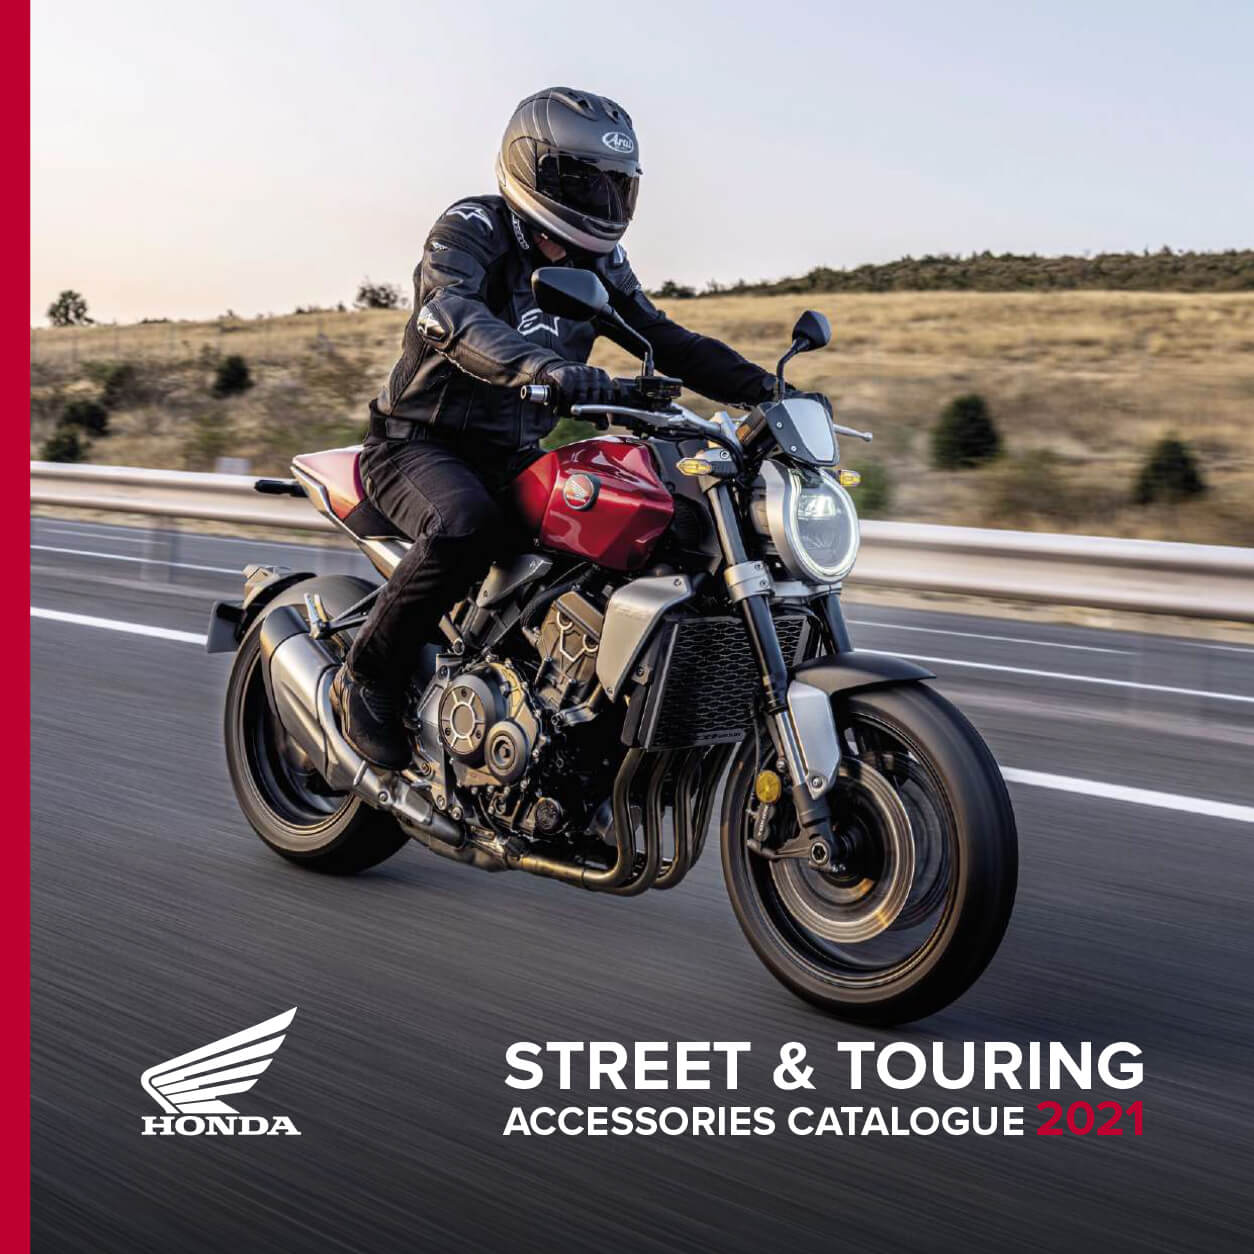 Honda Accessory Brochure 2021 - Street & Touring